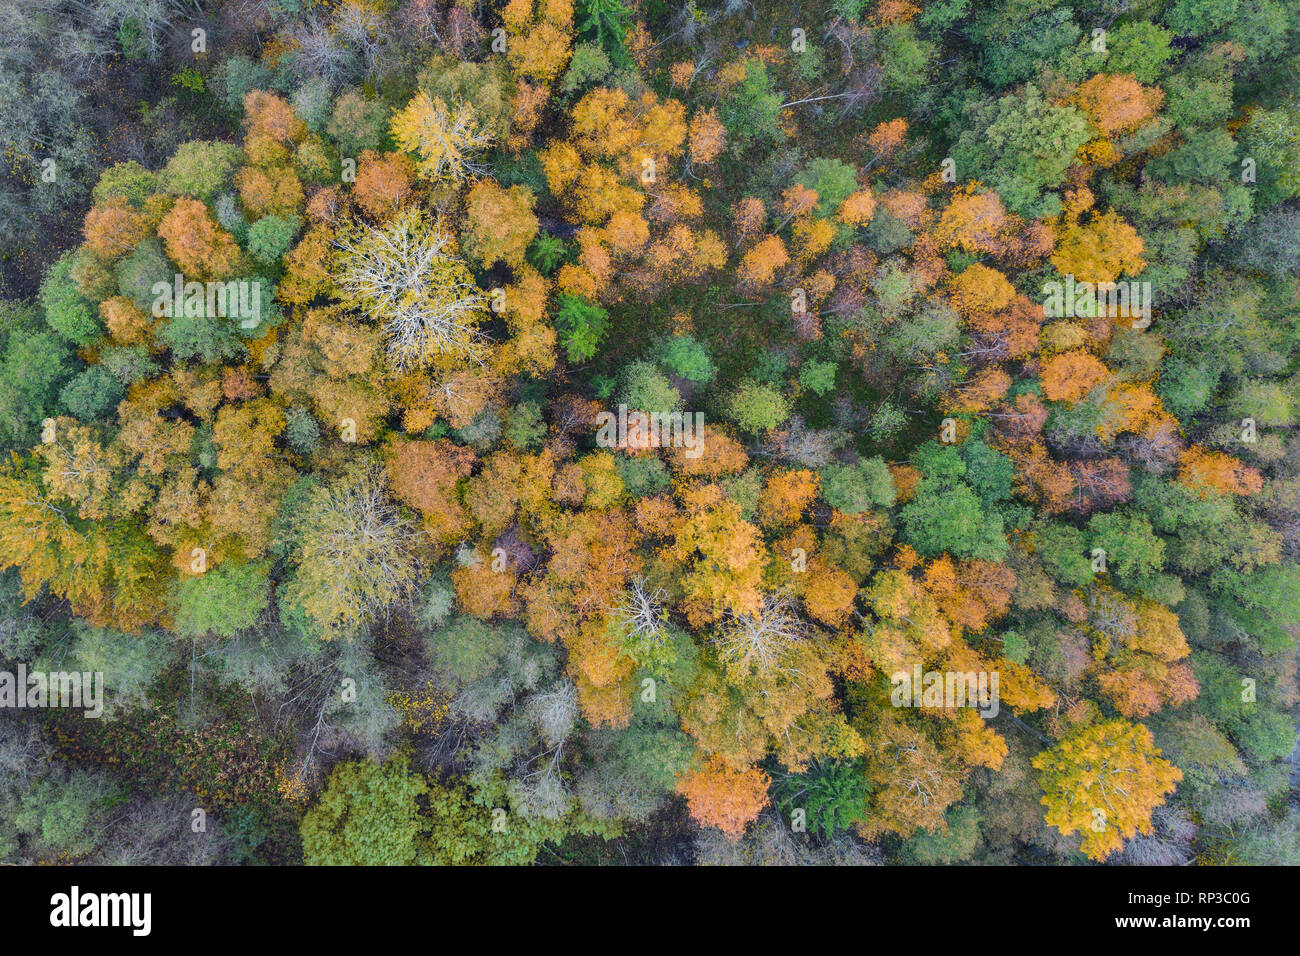 Vista aérea de colorido bosque boreal, otoño. Foto de stock